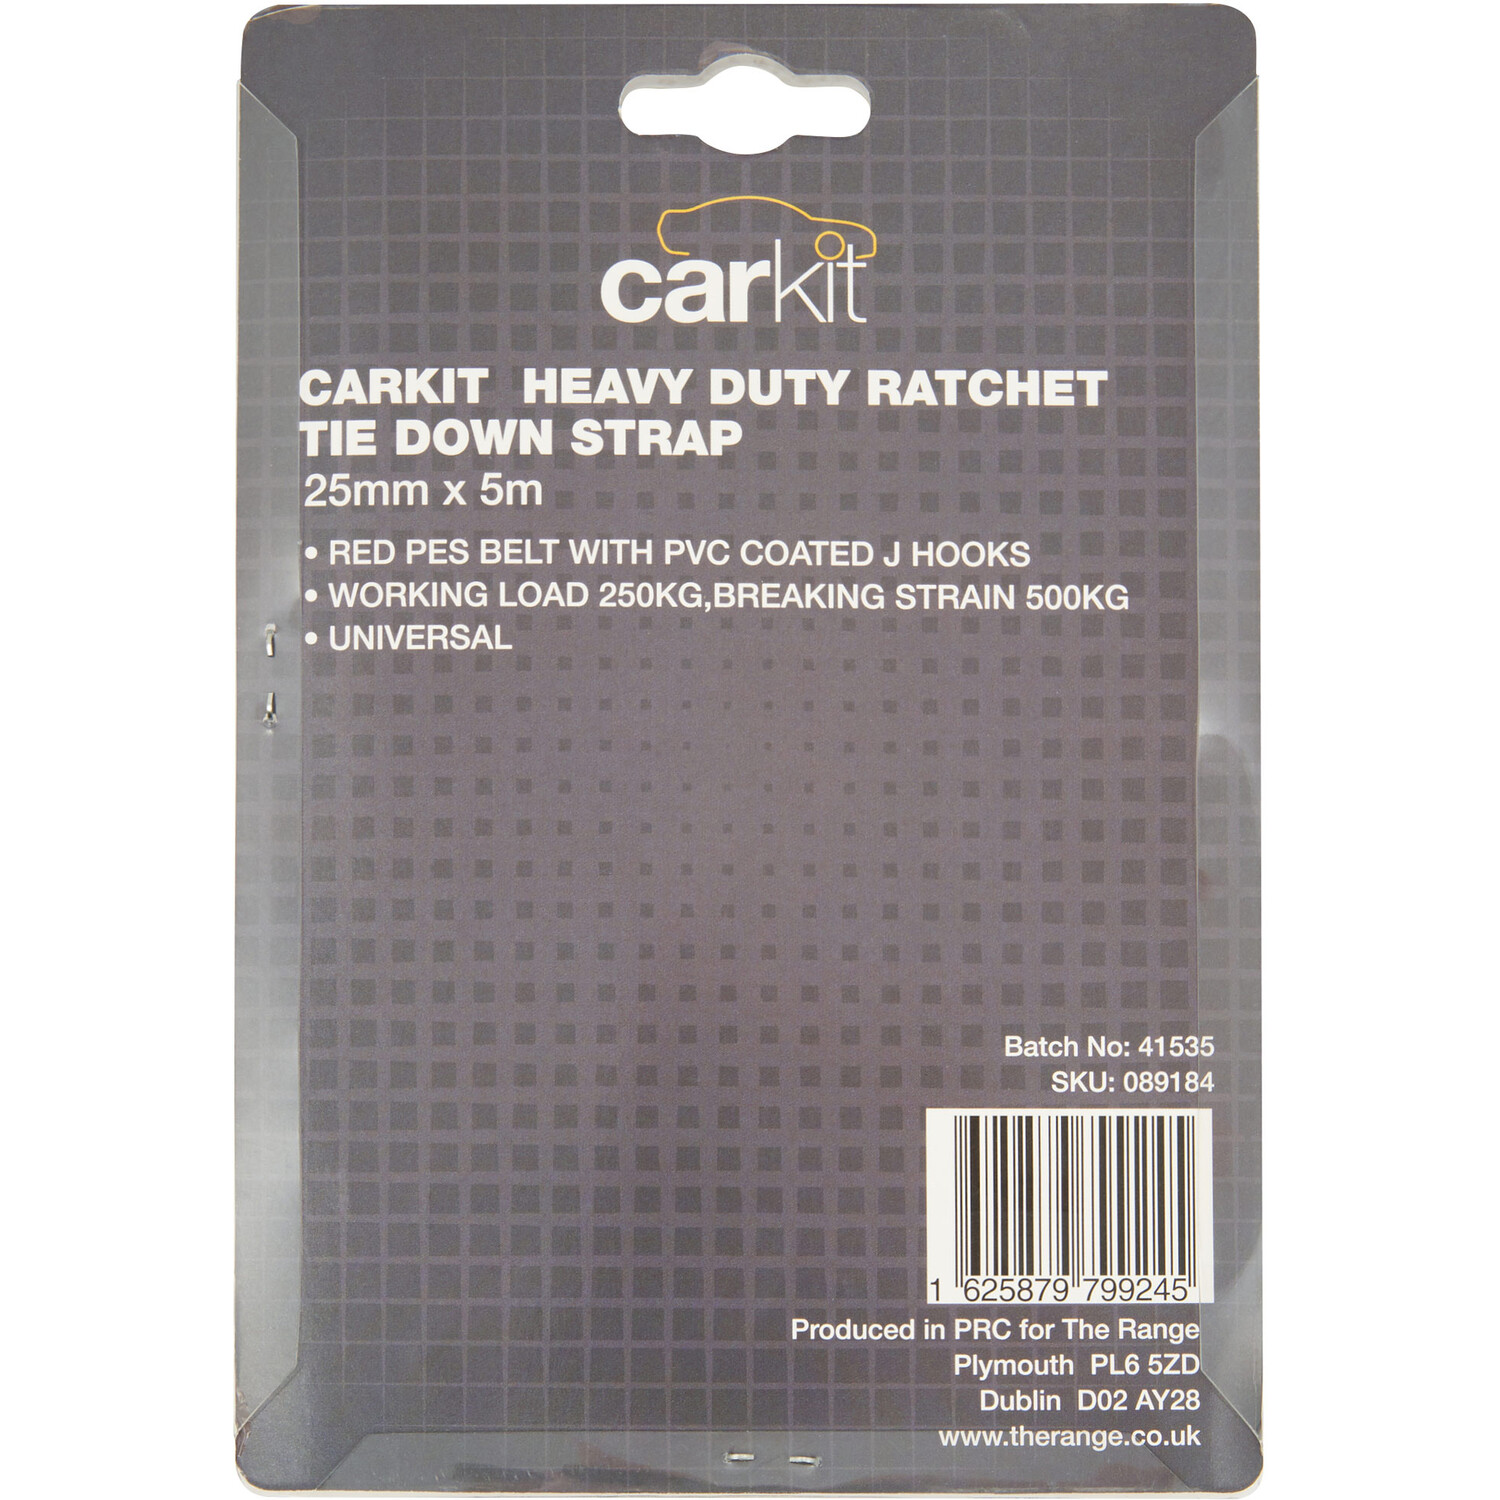 Carkit Heavy Duty Ratchet Tie Down Strap Image 7